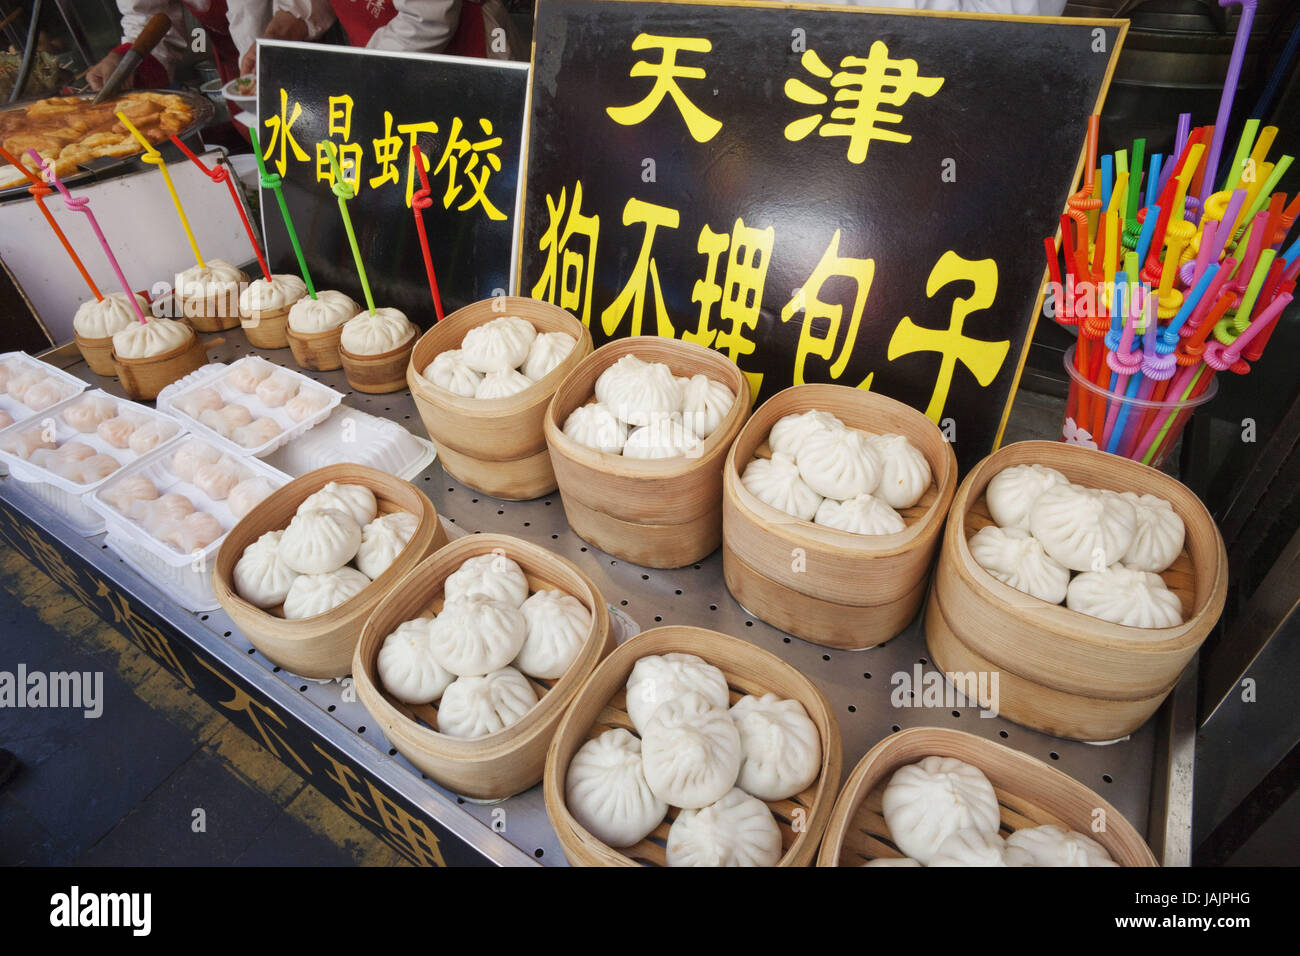 China,Peking,Donghuamen night market,food, Stock Photo